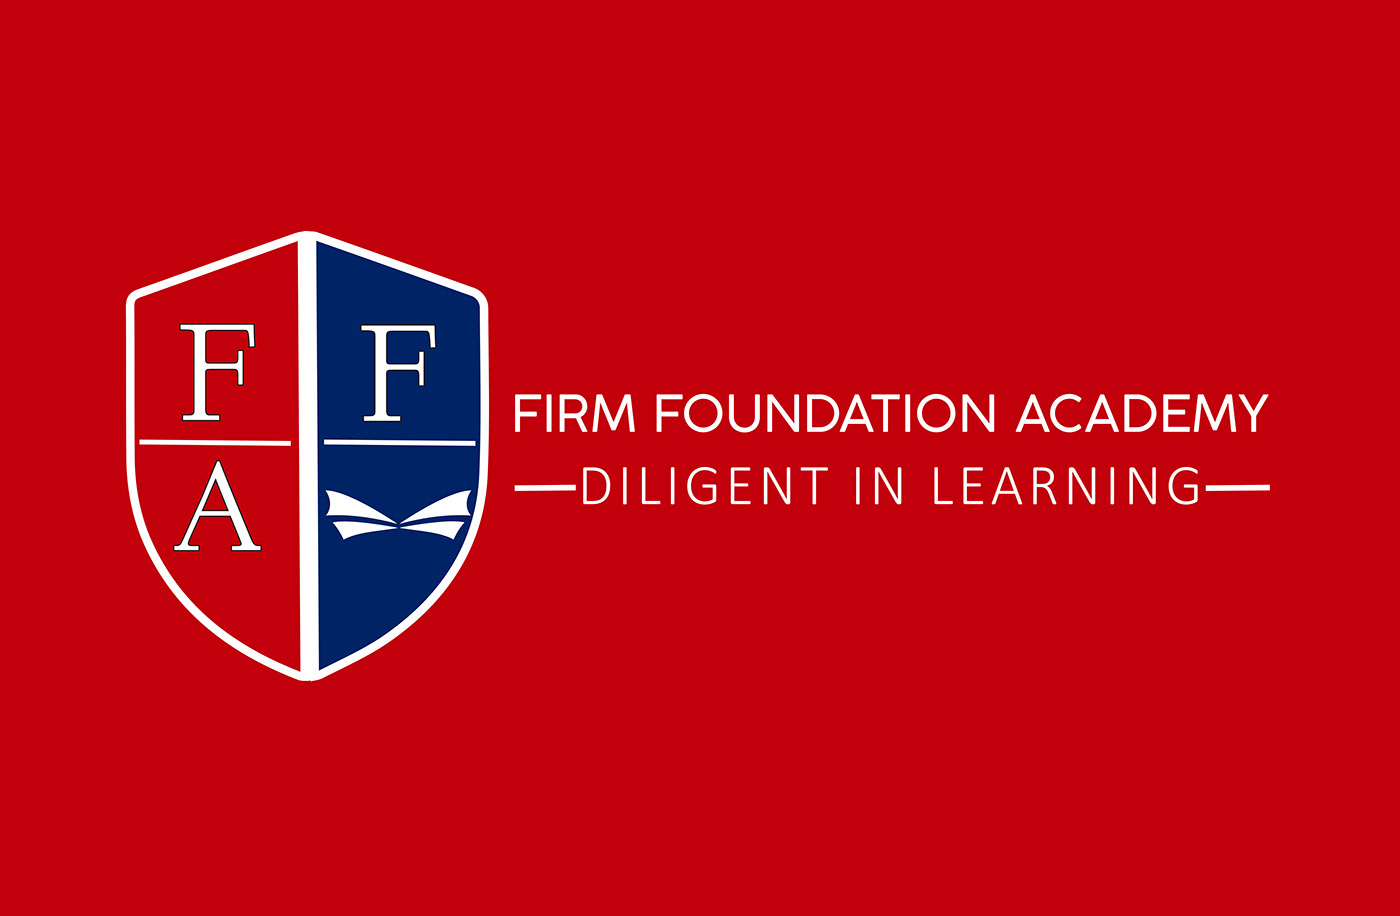 firm foundation academy logo design, Behance by Morwan Ahmed